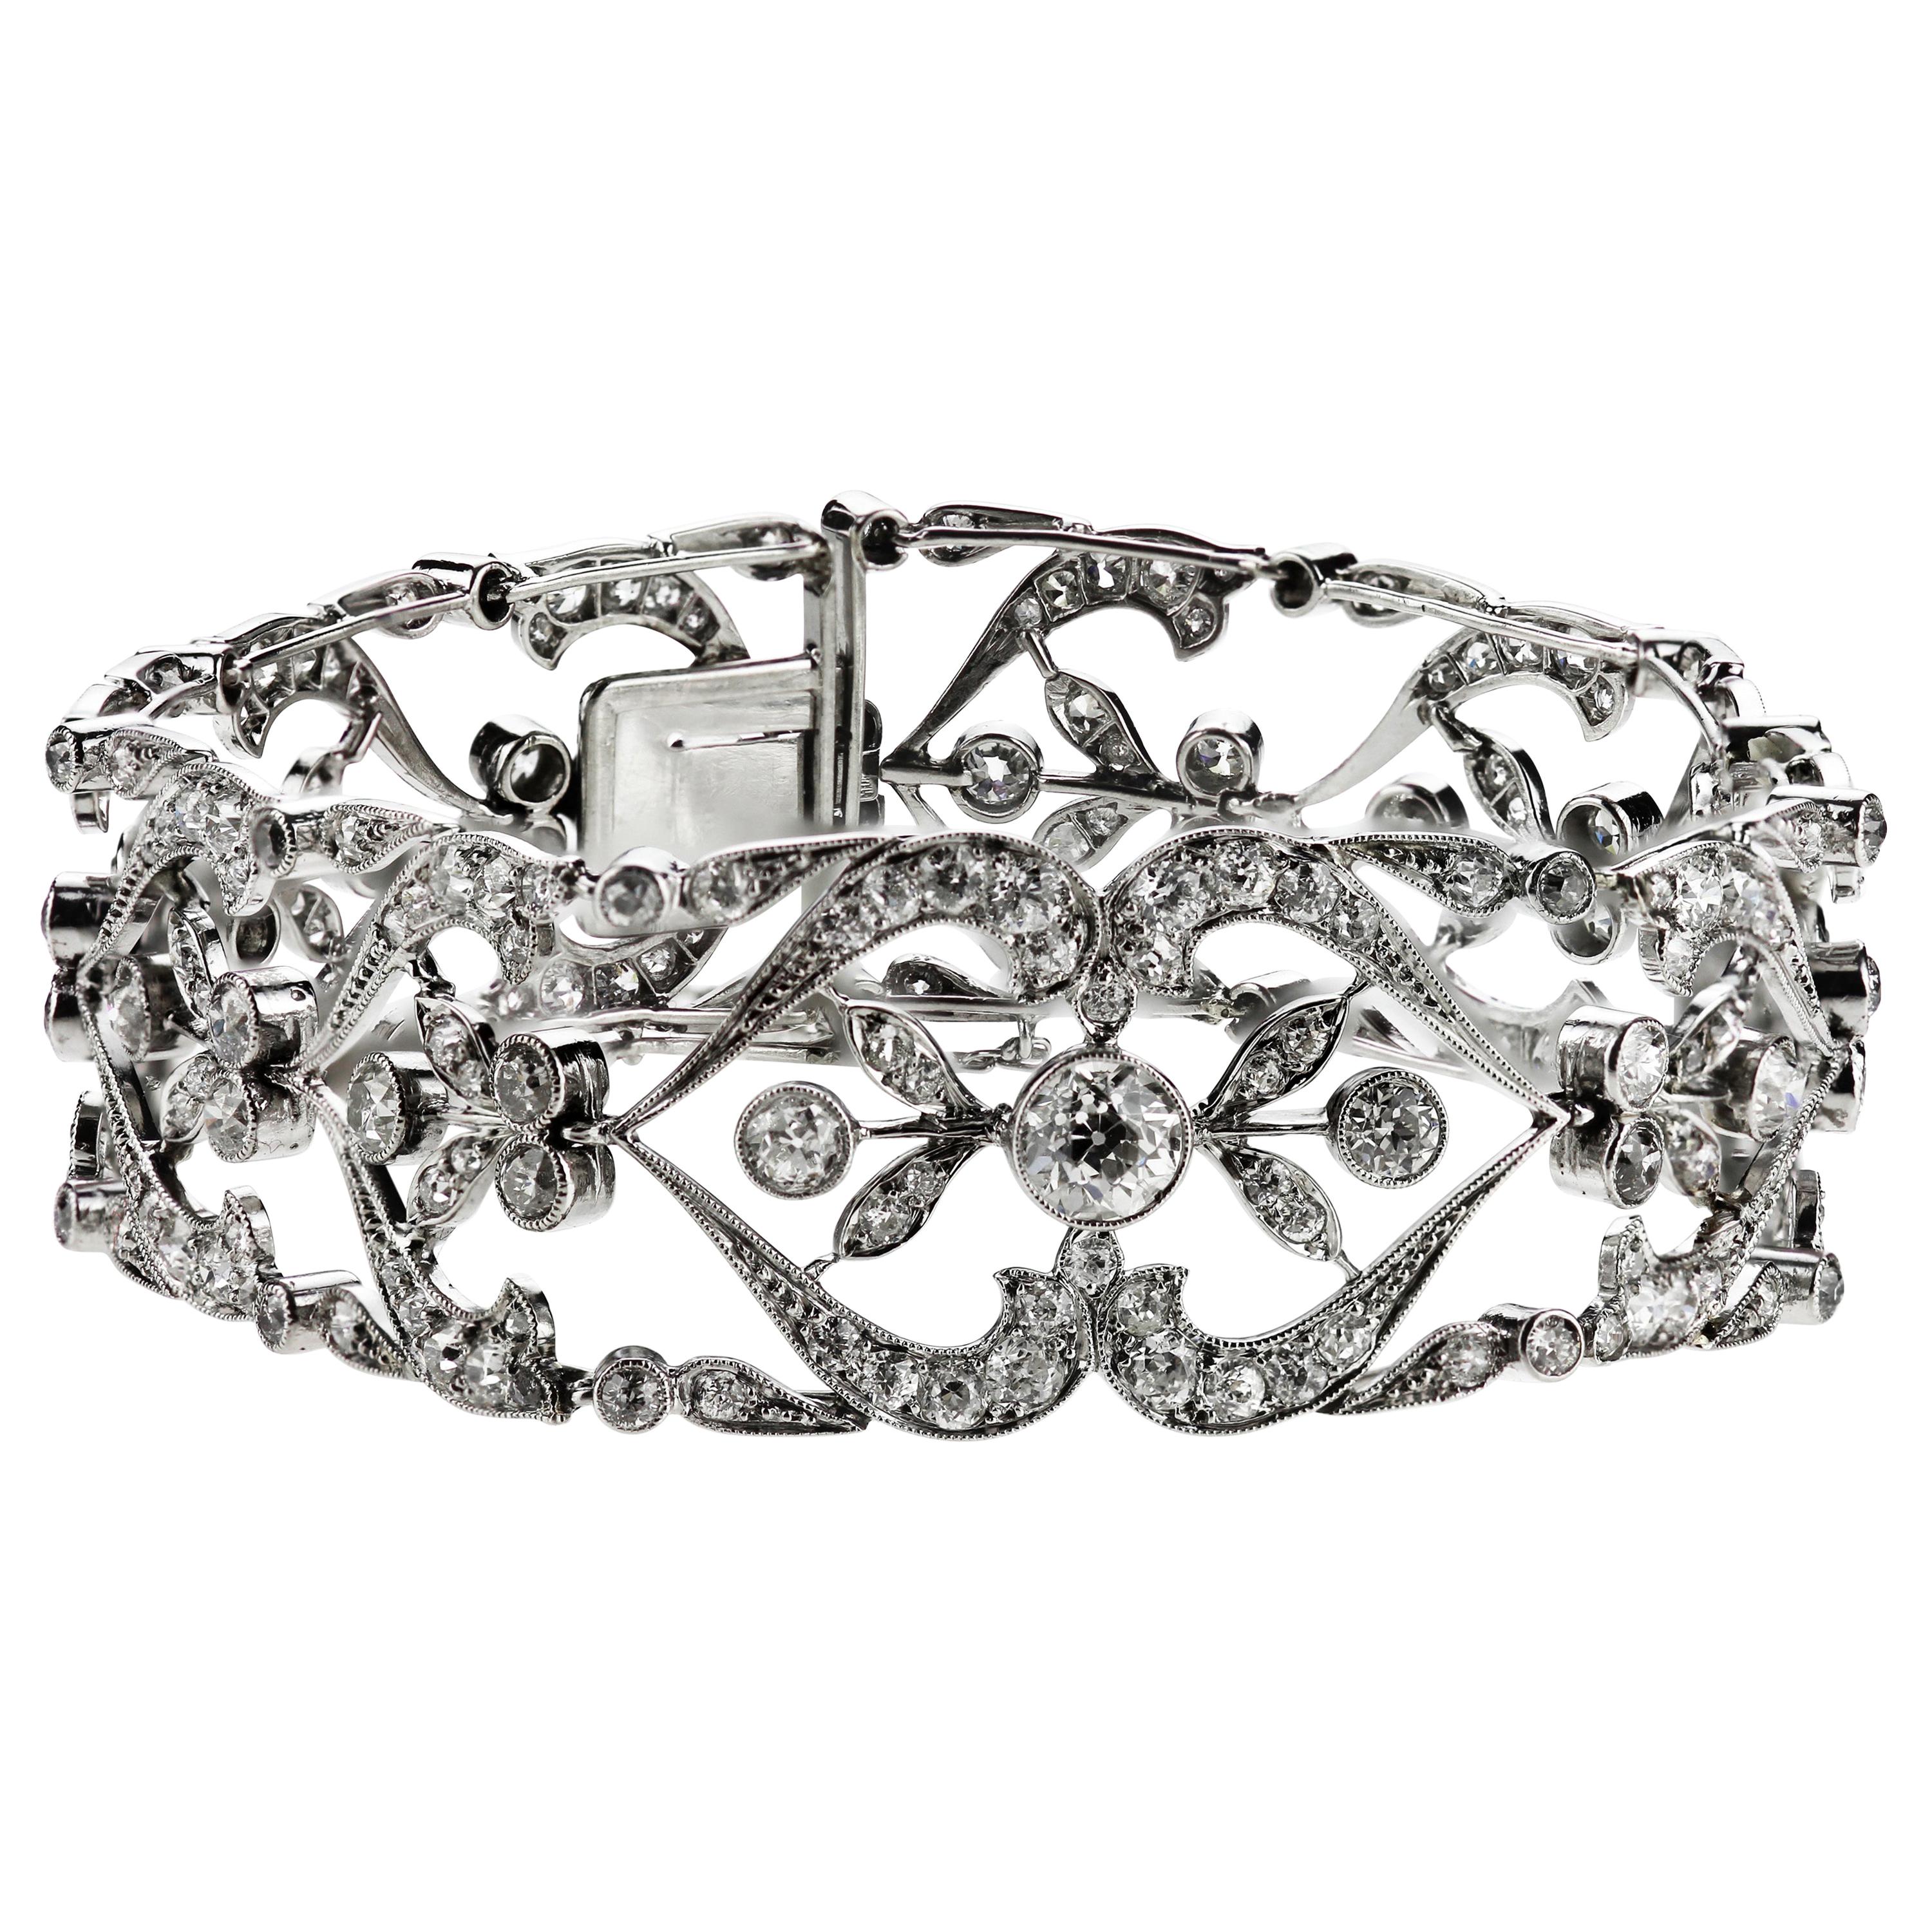 Antique Edwardian Old European Cut Diamond Bracelet in Platinum, Lace Design